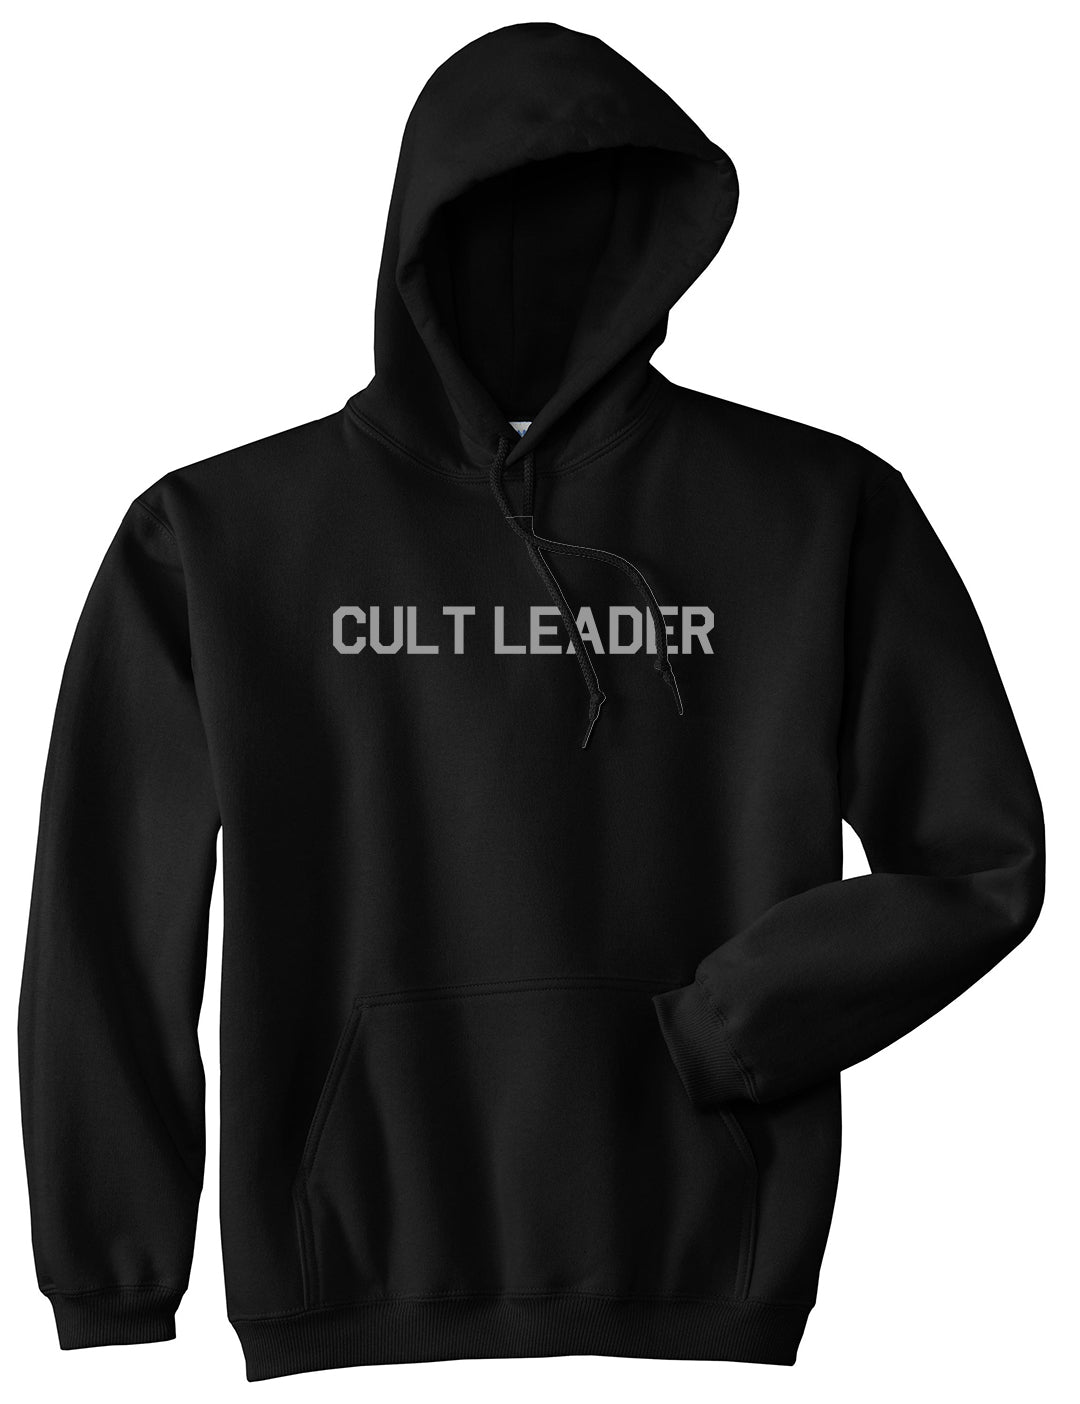 Cult Leader Costume Mens Pullover Hoodie Black by Kings Of NY